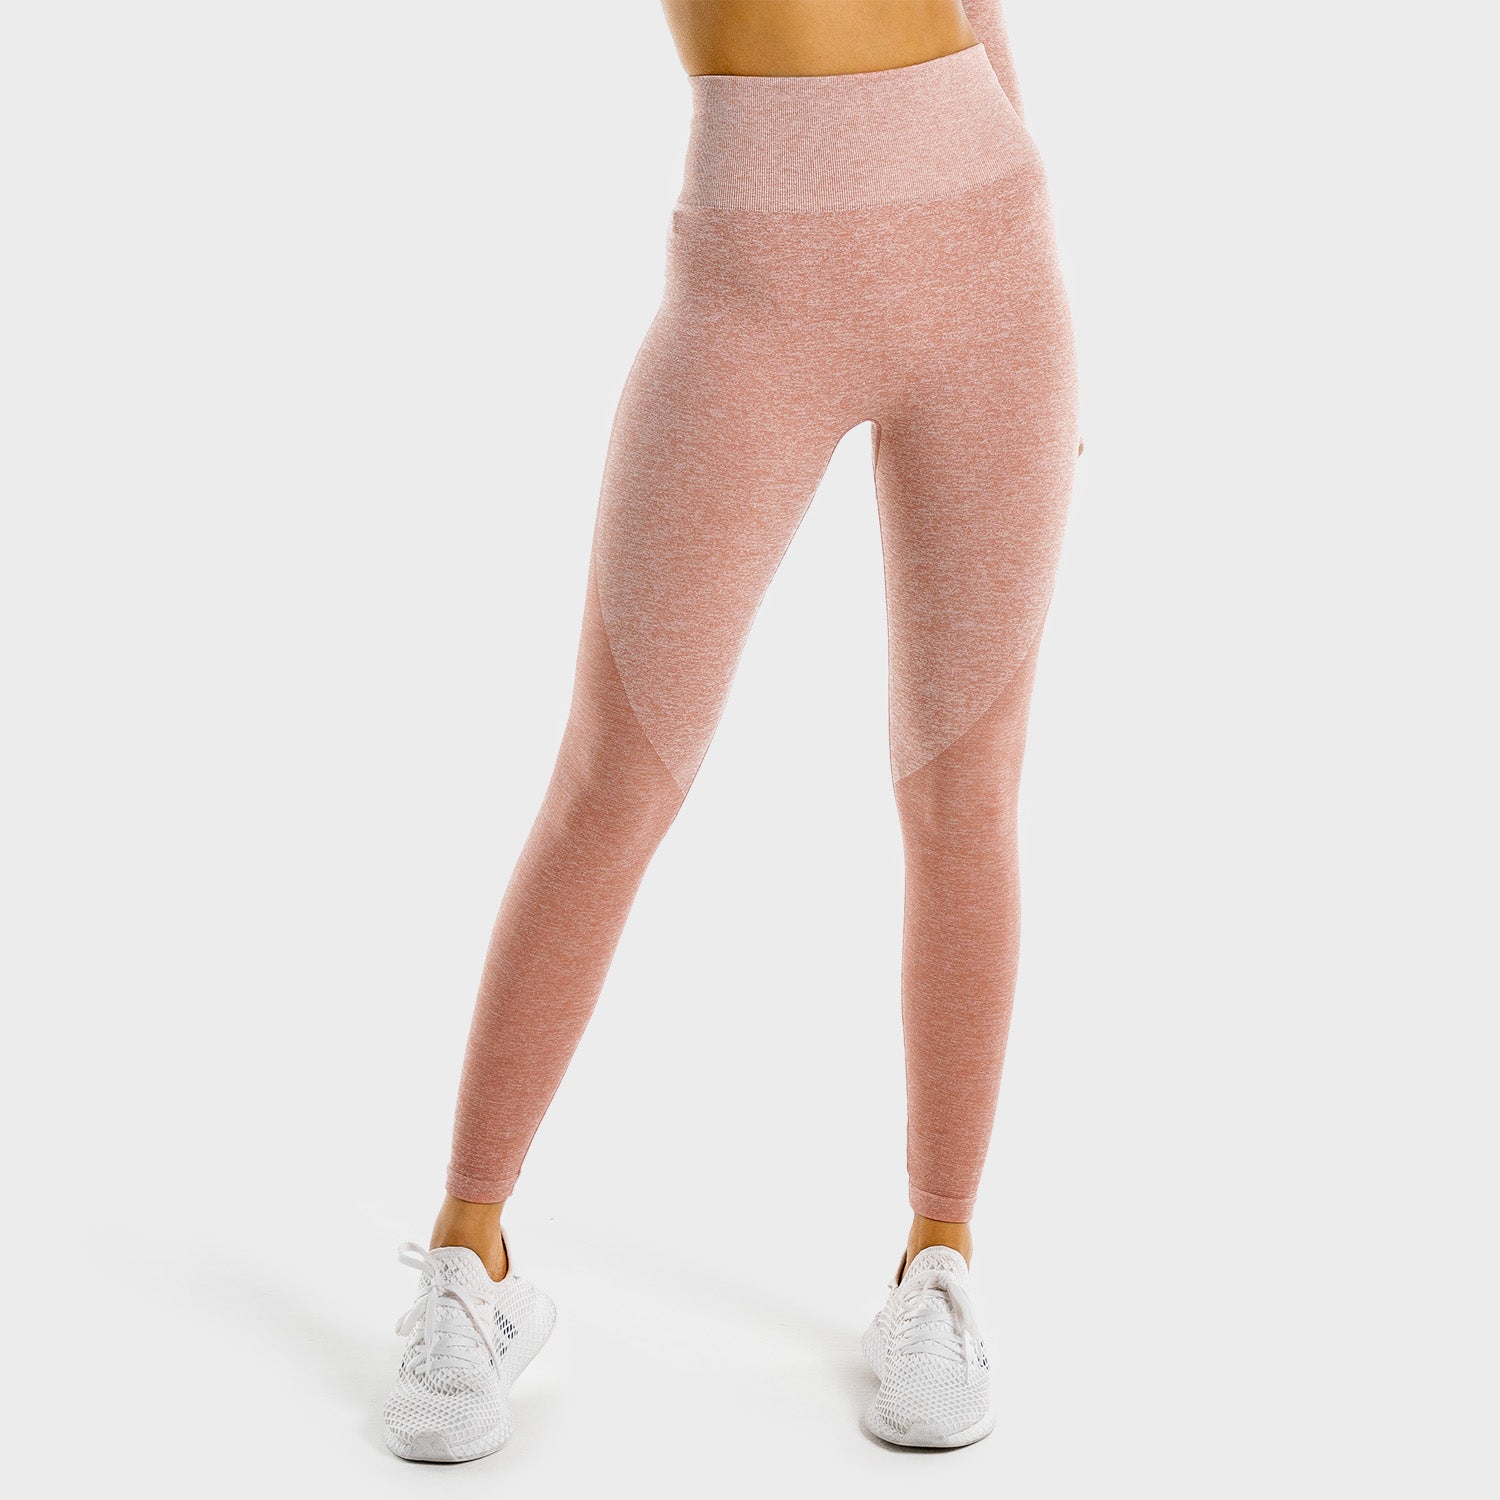 QRIC Womens Seamless Butt Lift Leggings High Waisted Yoga Pants